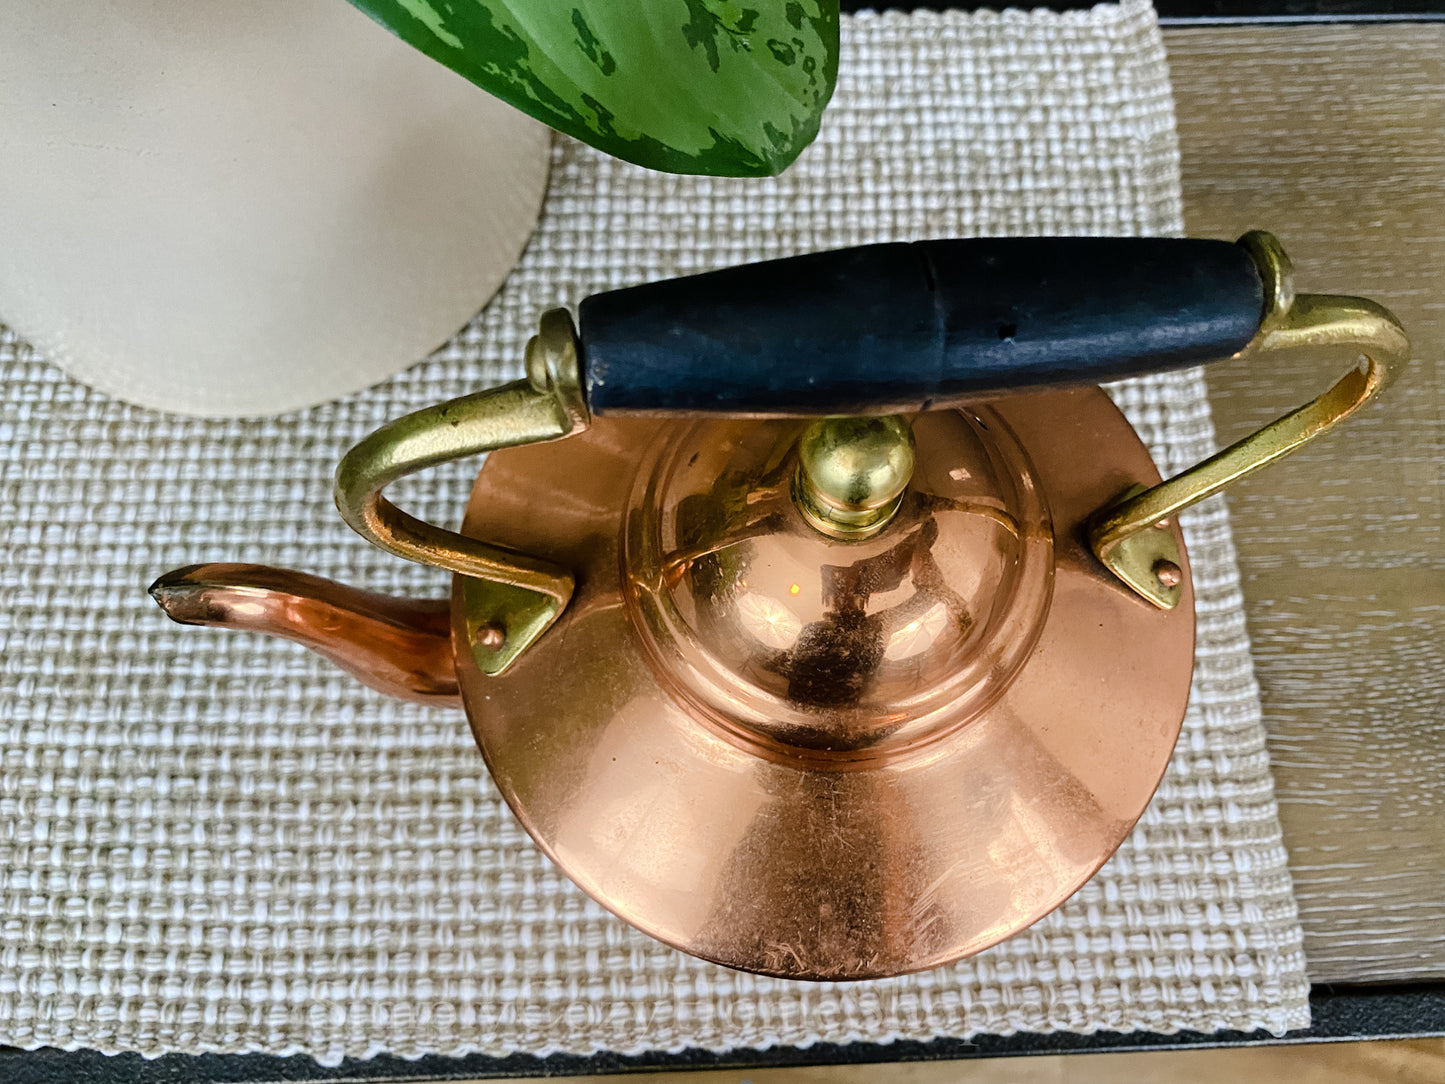 Vintage copper tea kettle with bronze handle